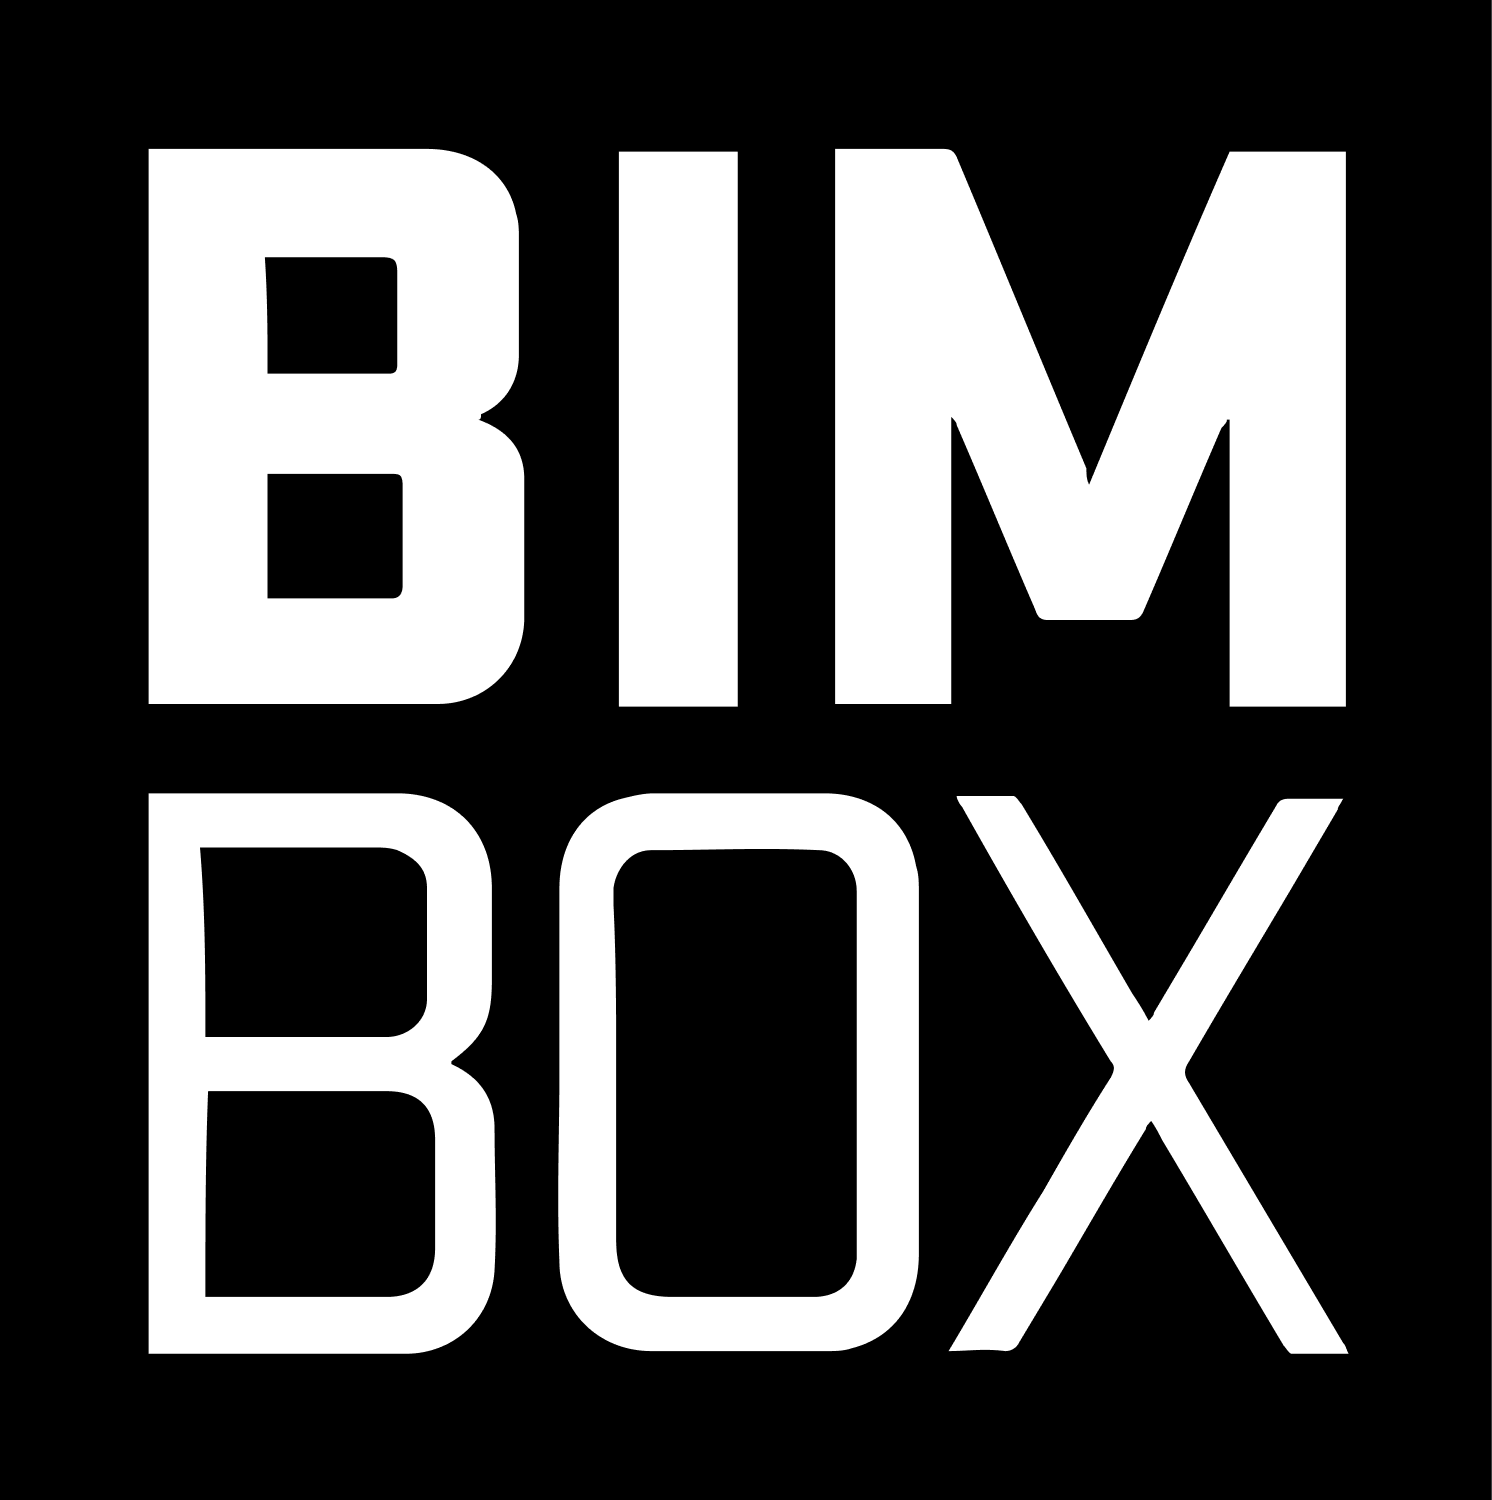 BIMBOX logo